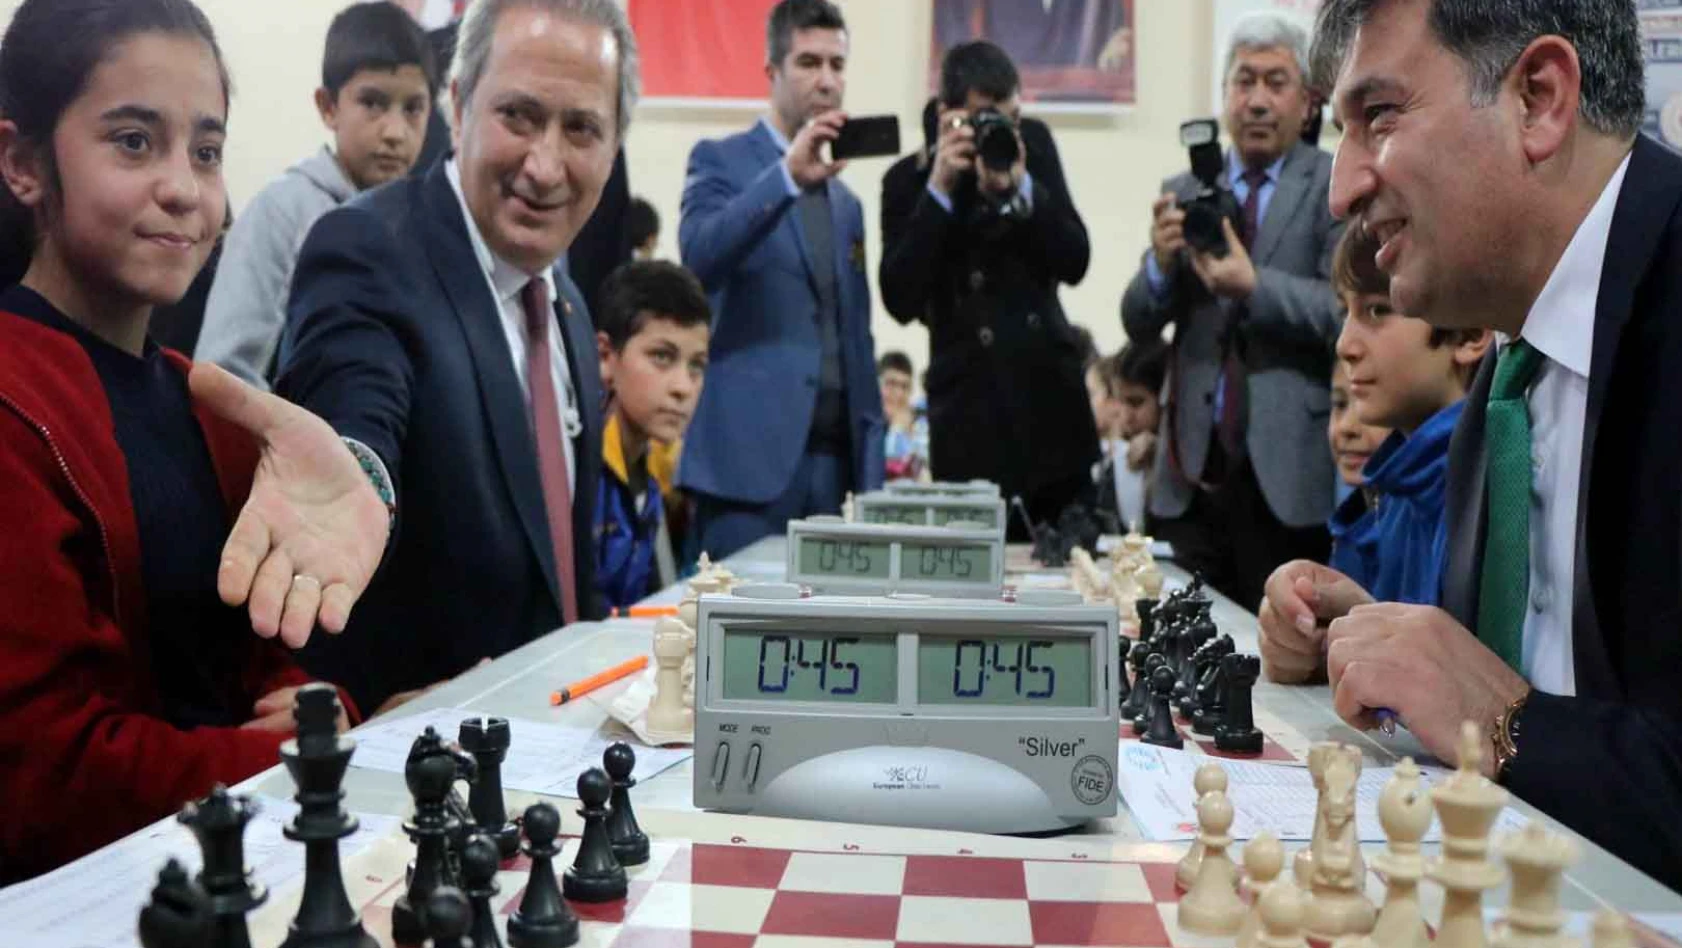 Satranç turnuvasında 937 öğrenci ter döktü